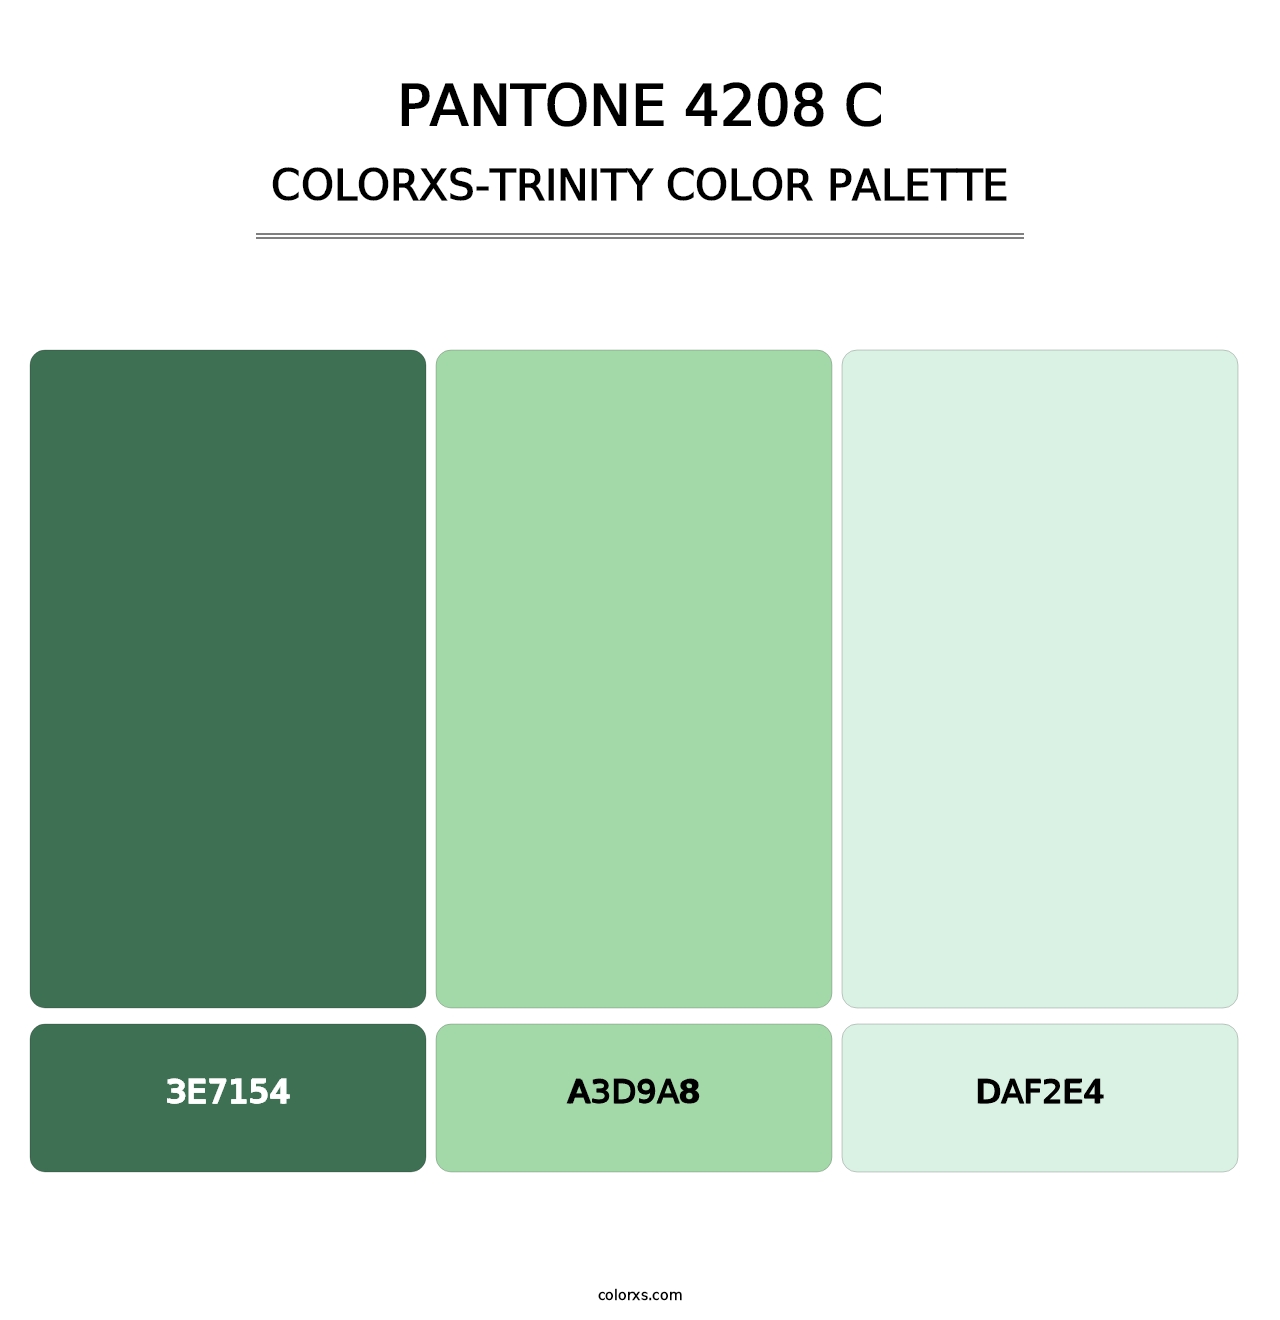 PANTONE 4208 C - Colorxs Trinity Palette